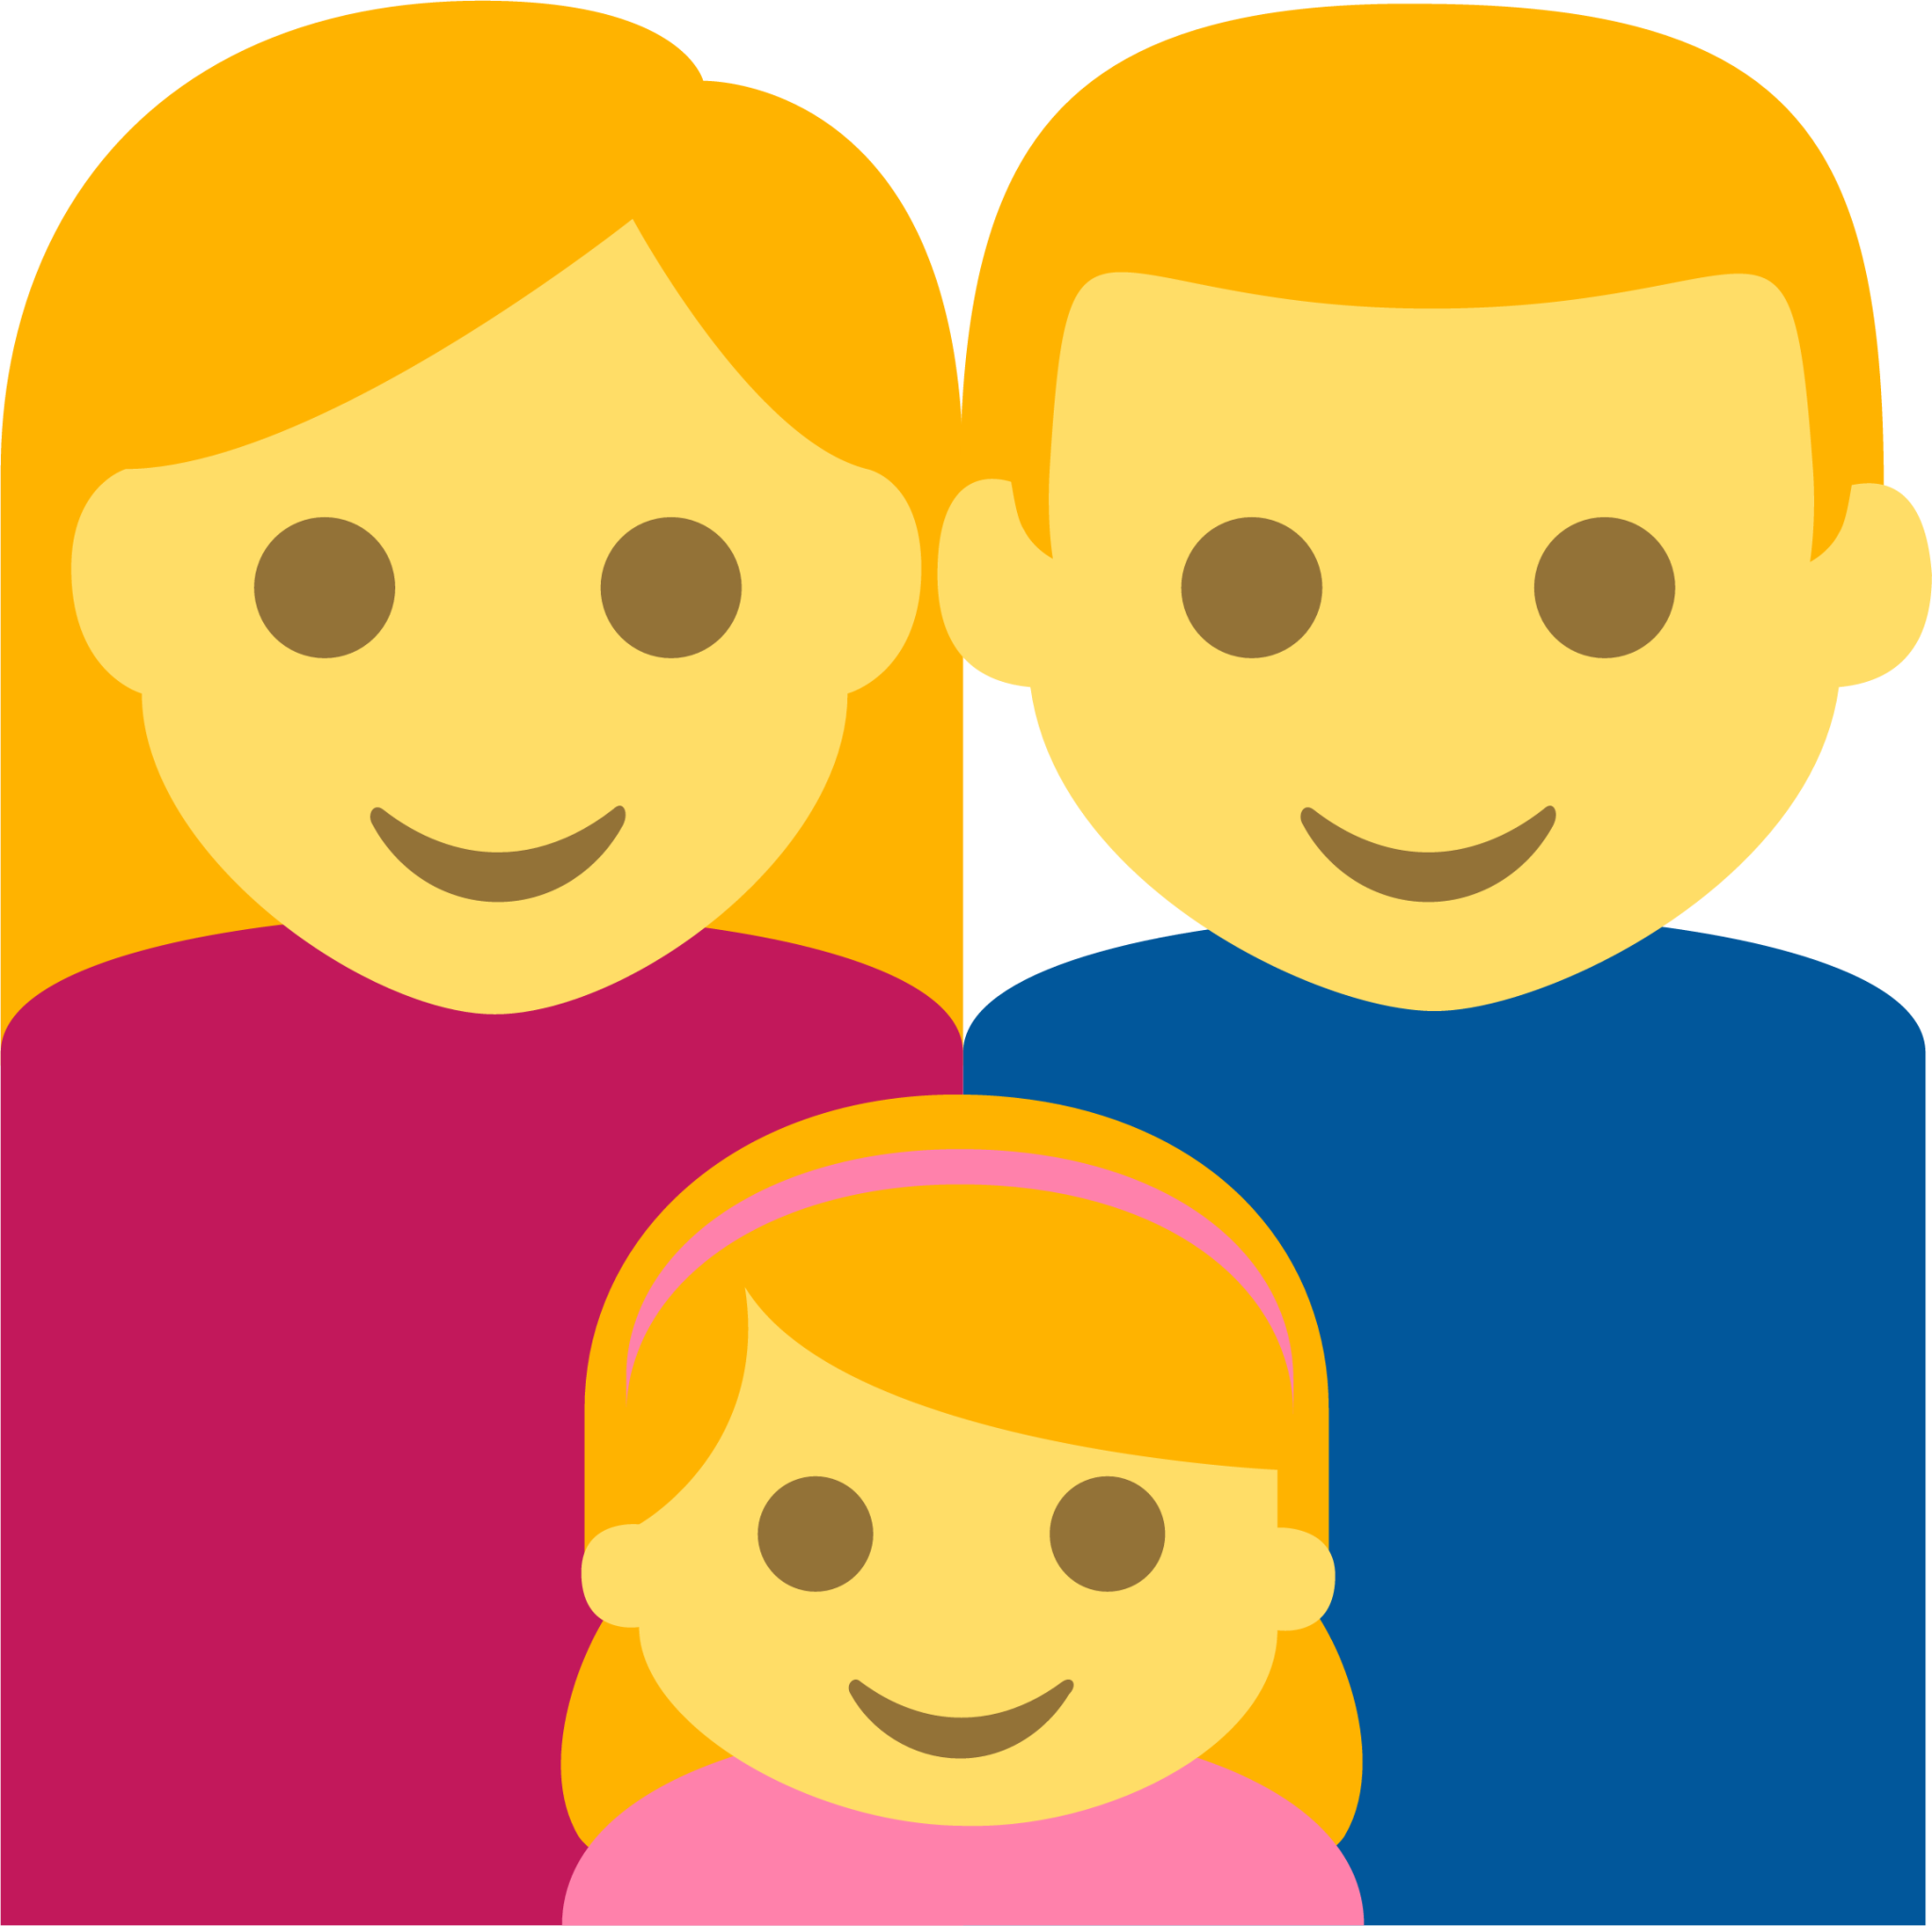 family (man,woman,girl) emoji